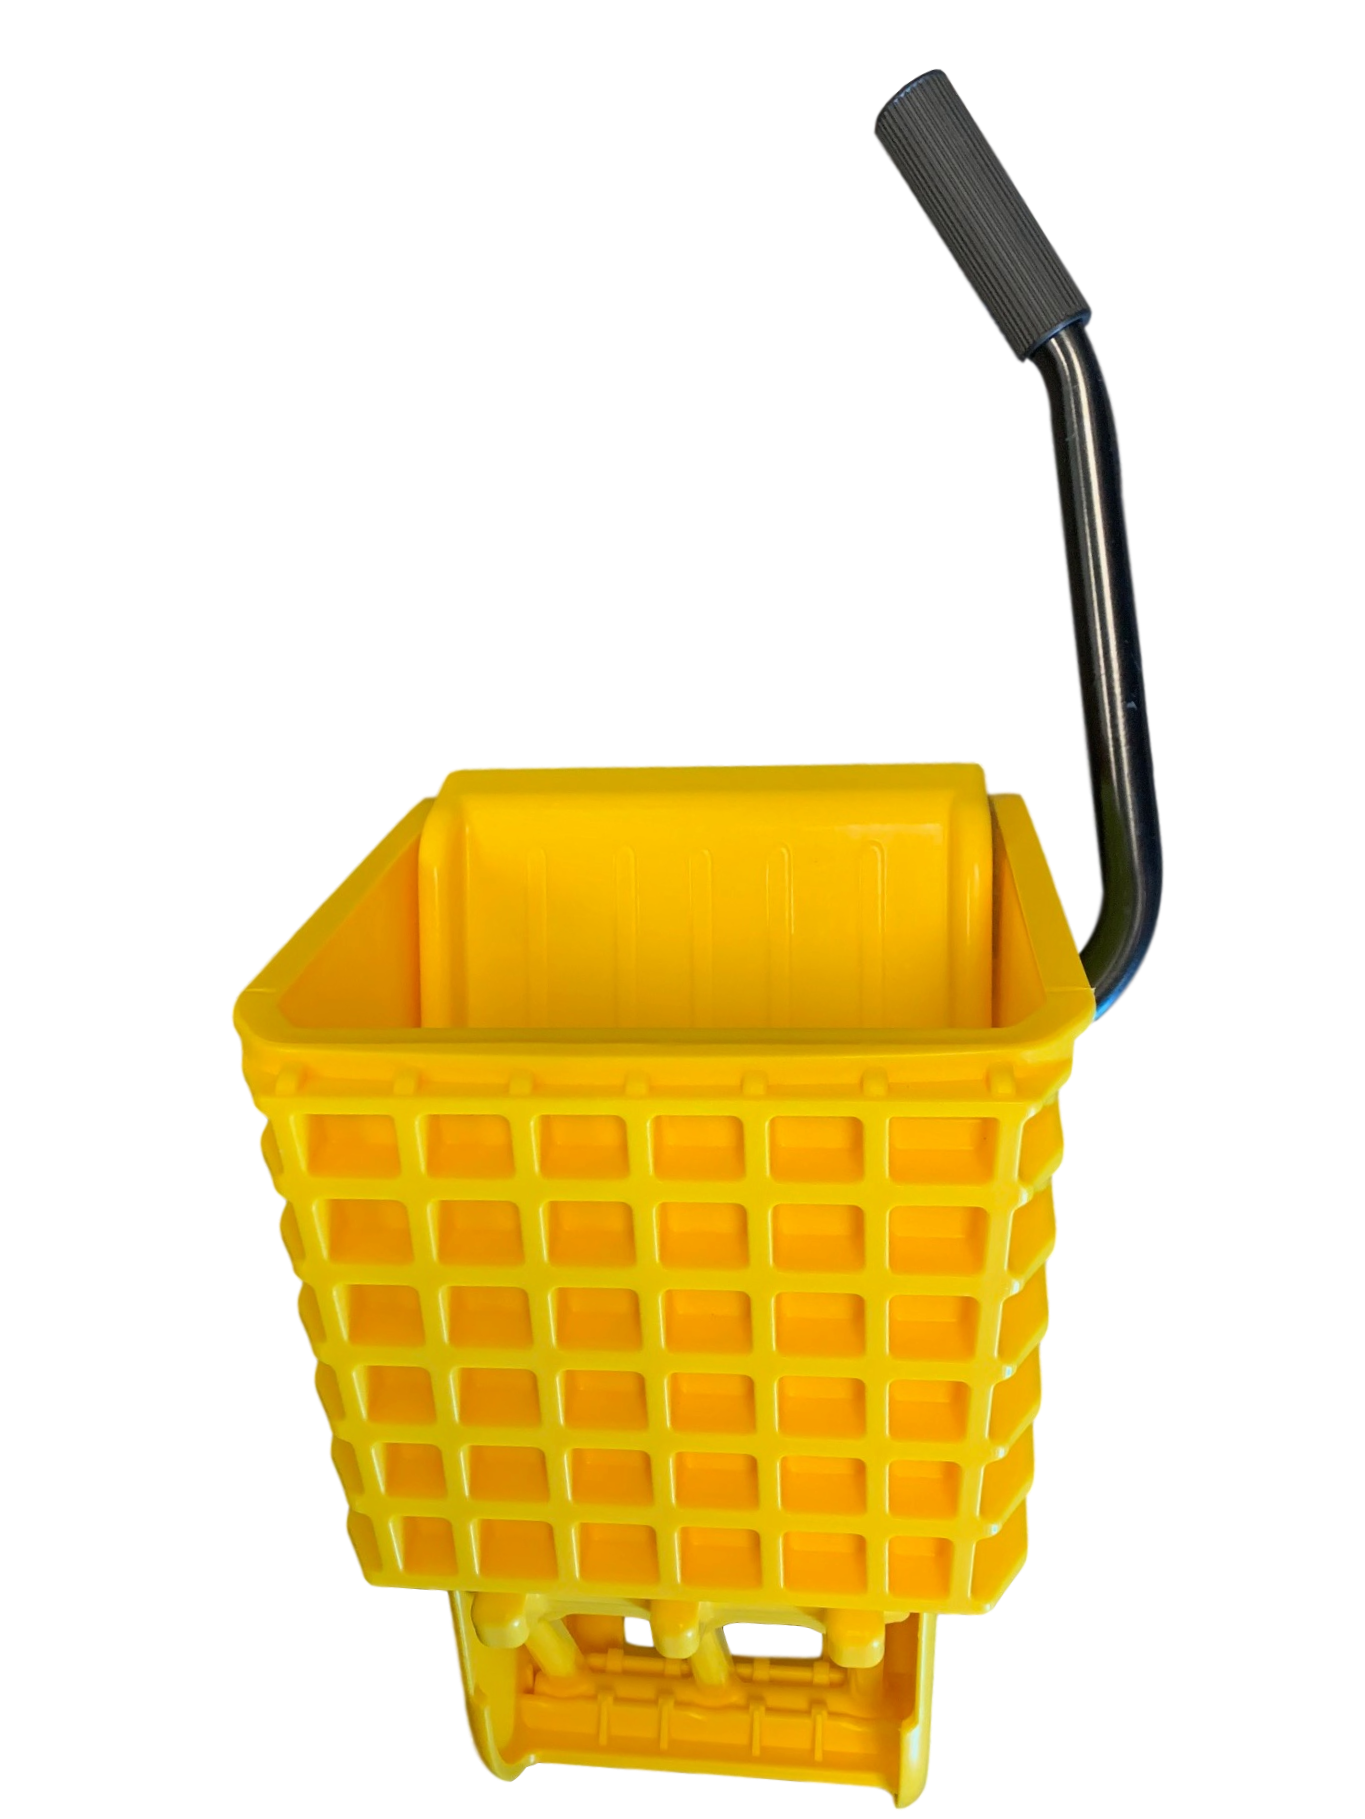 Delamo Yellow Wringer 
Sidepress fits 44qt, 35qt,26qt 
Mop Bucket 